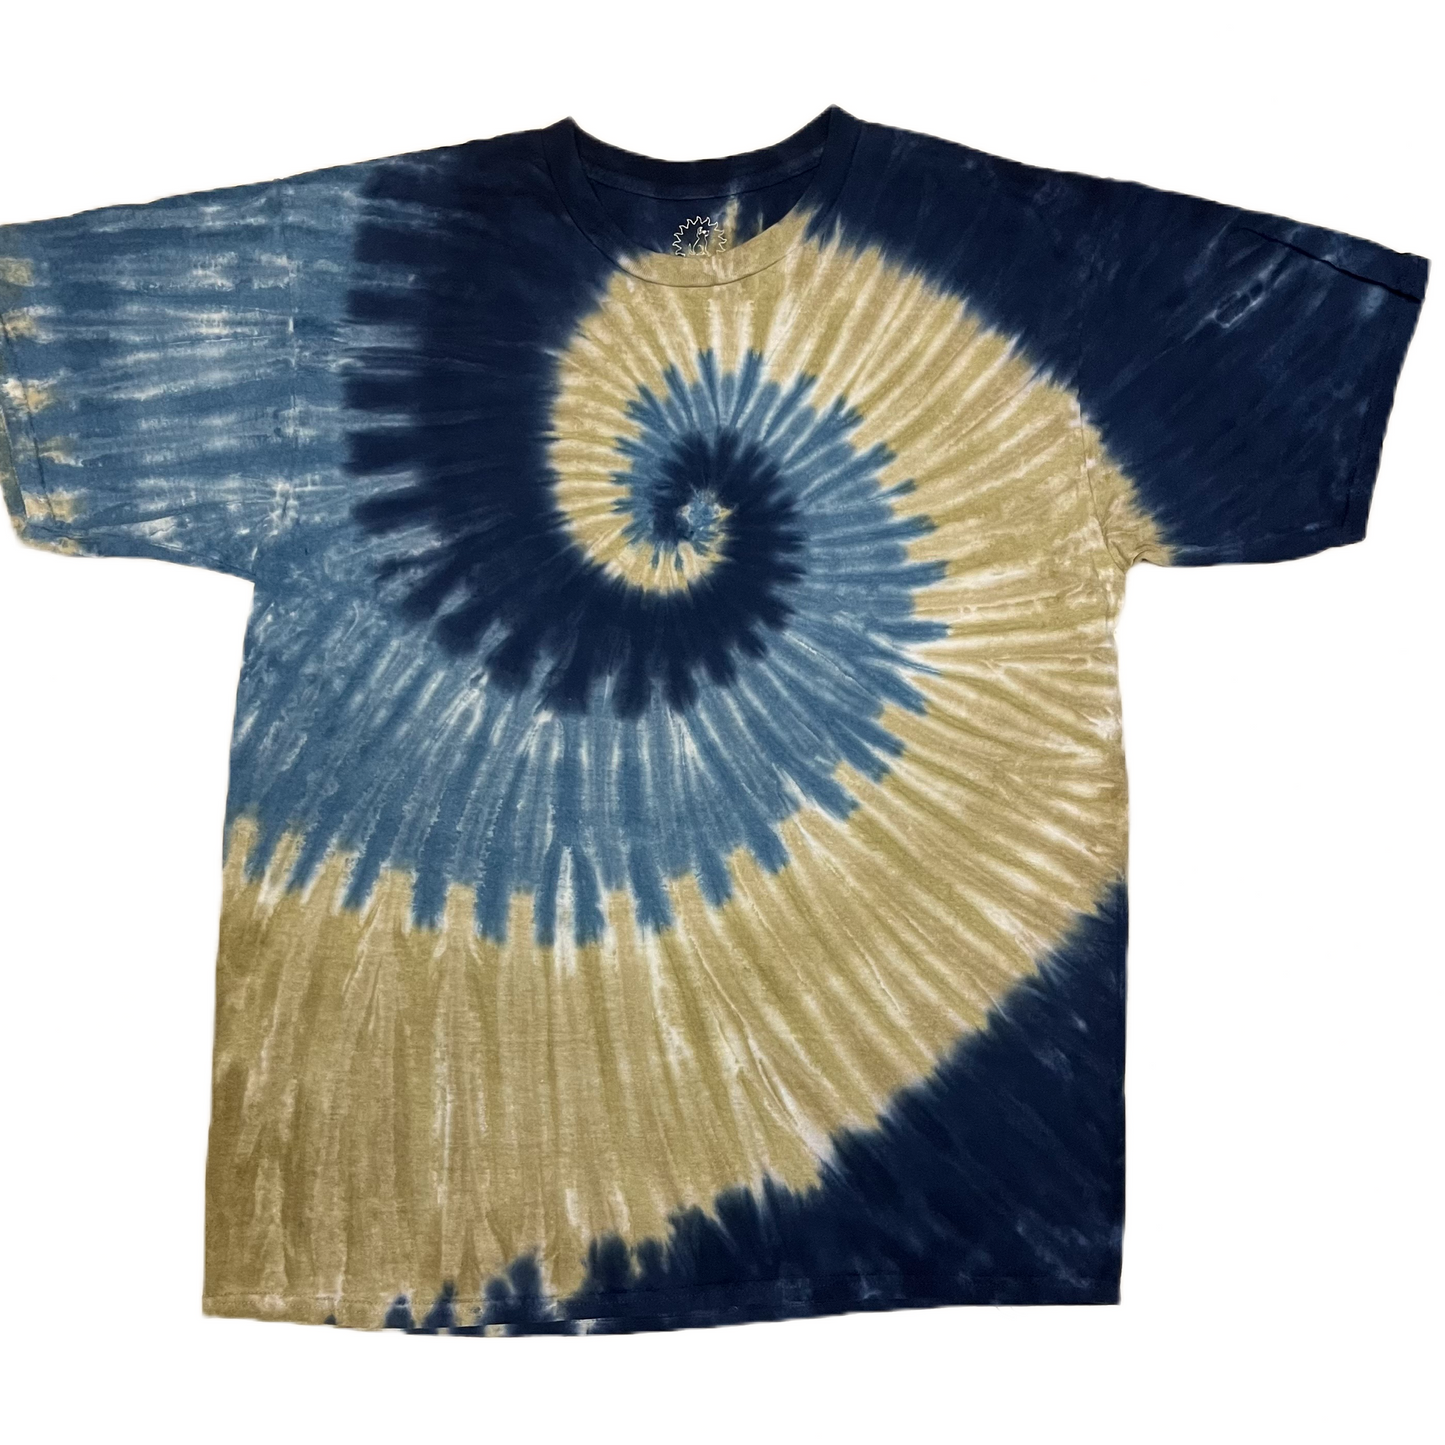 Waterfall Tie Dye t-shirt